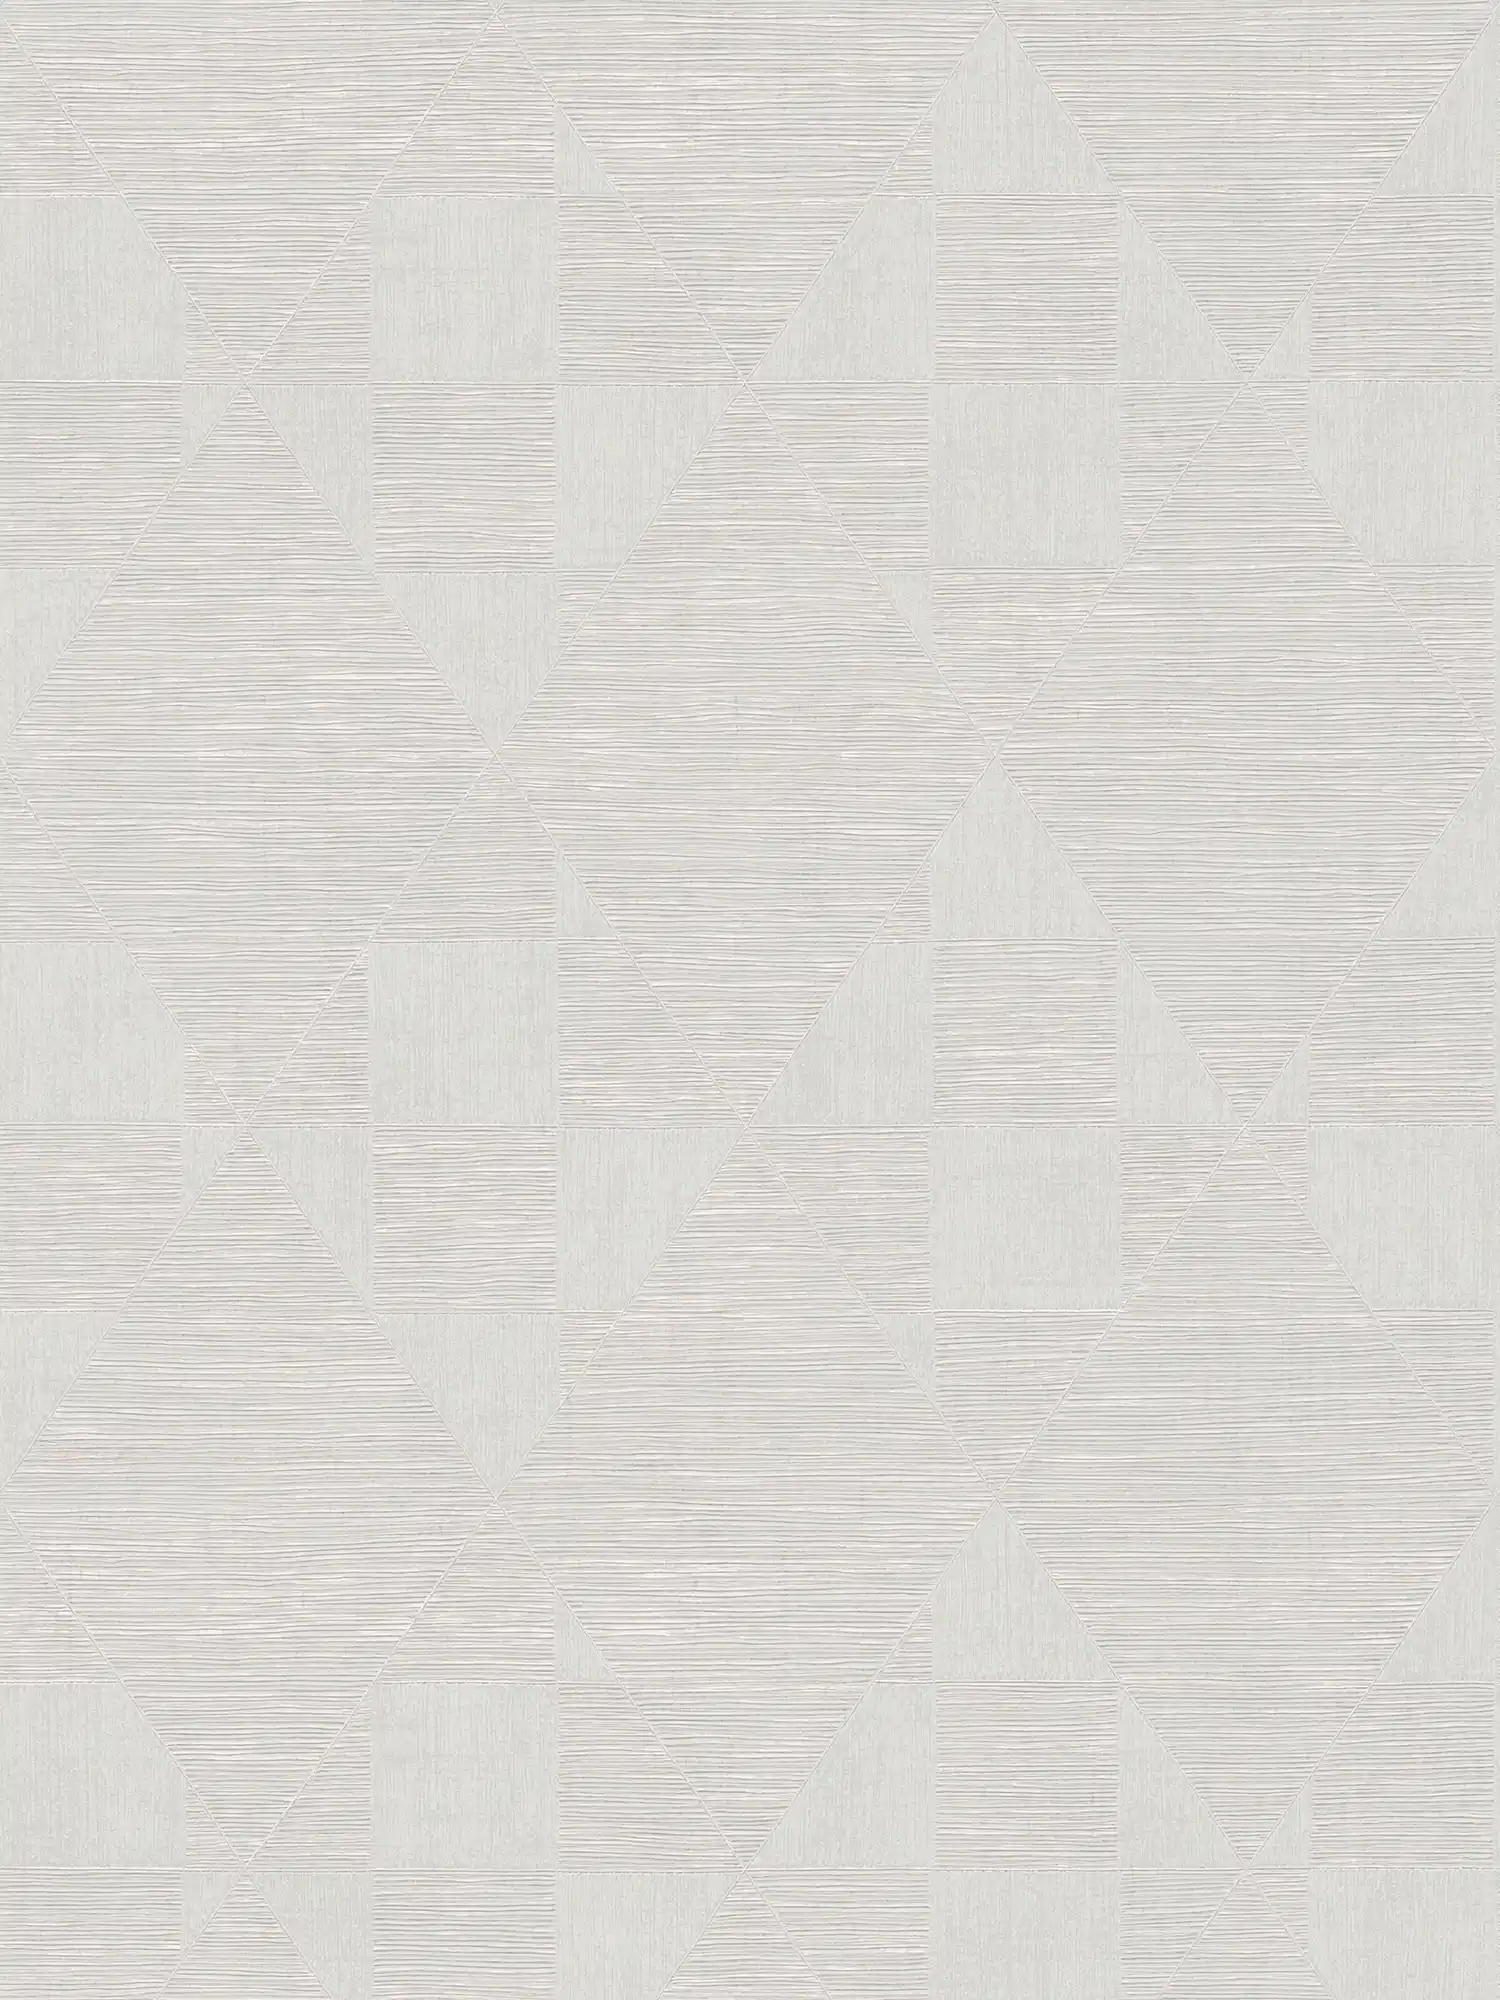             Metallic wallpaper with geometric texture pattern - beige, cream
        